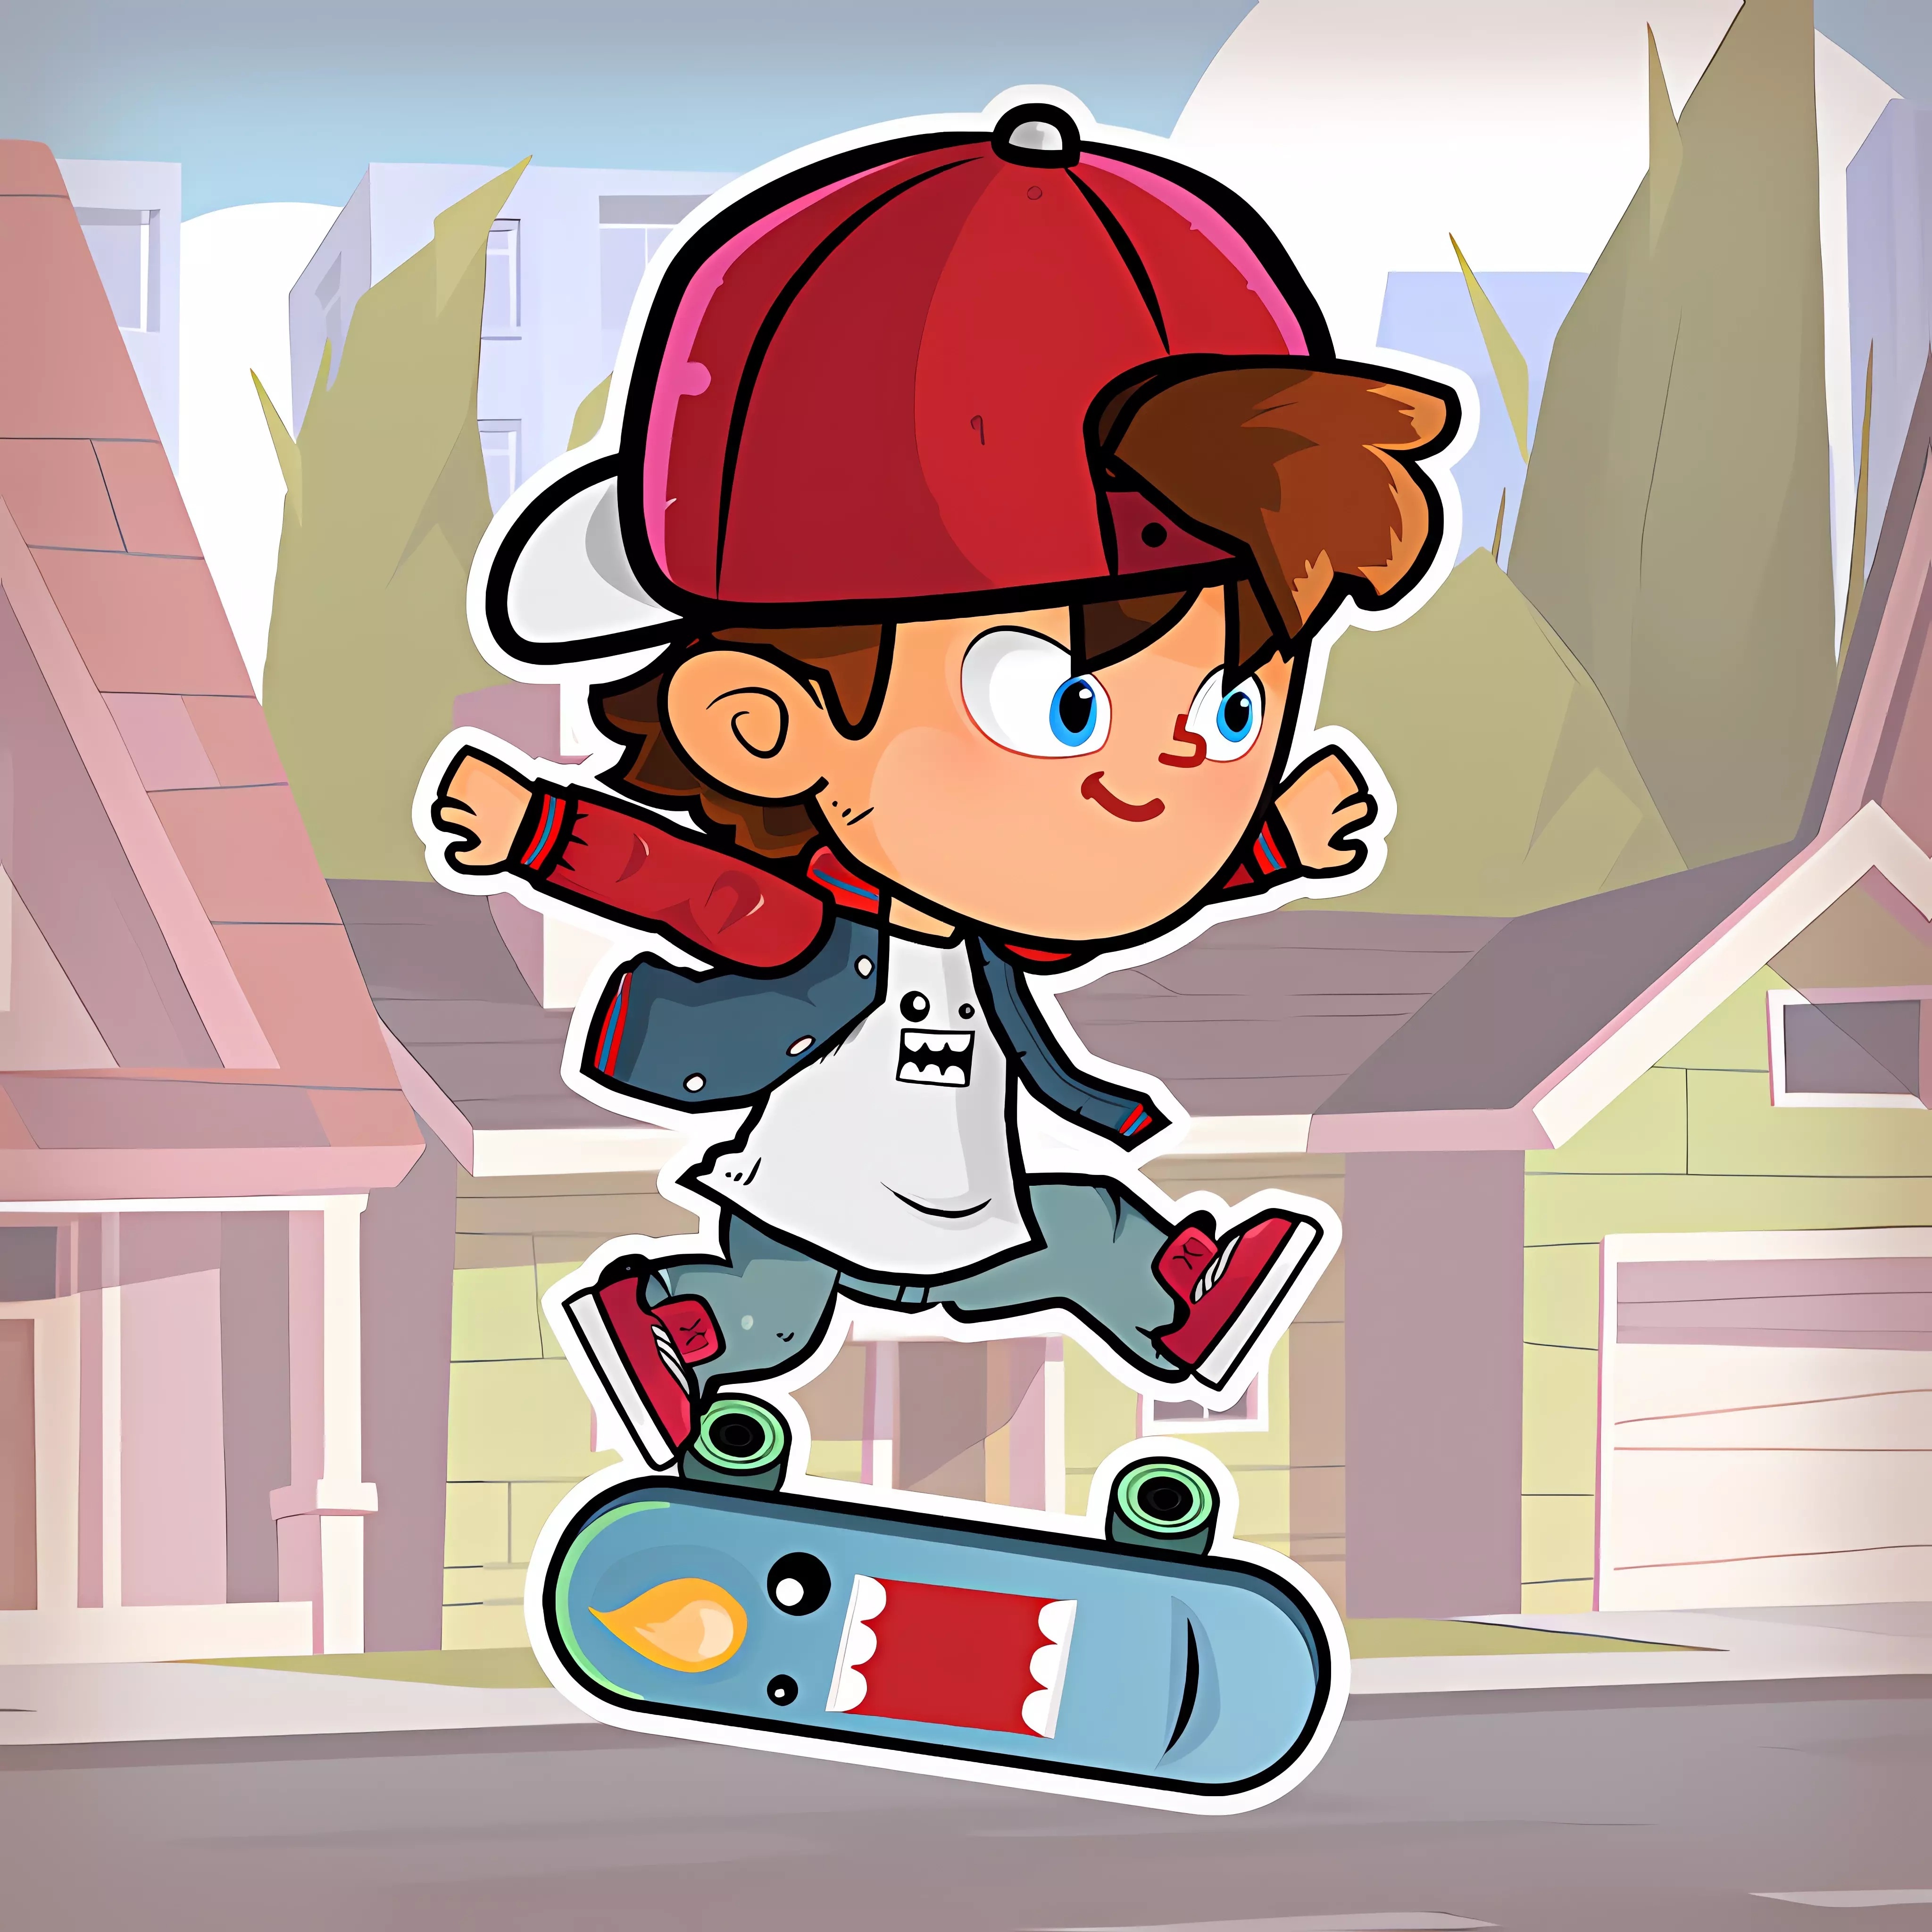 Skateboard Challenge